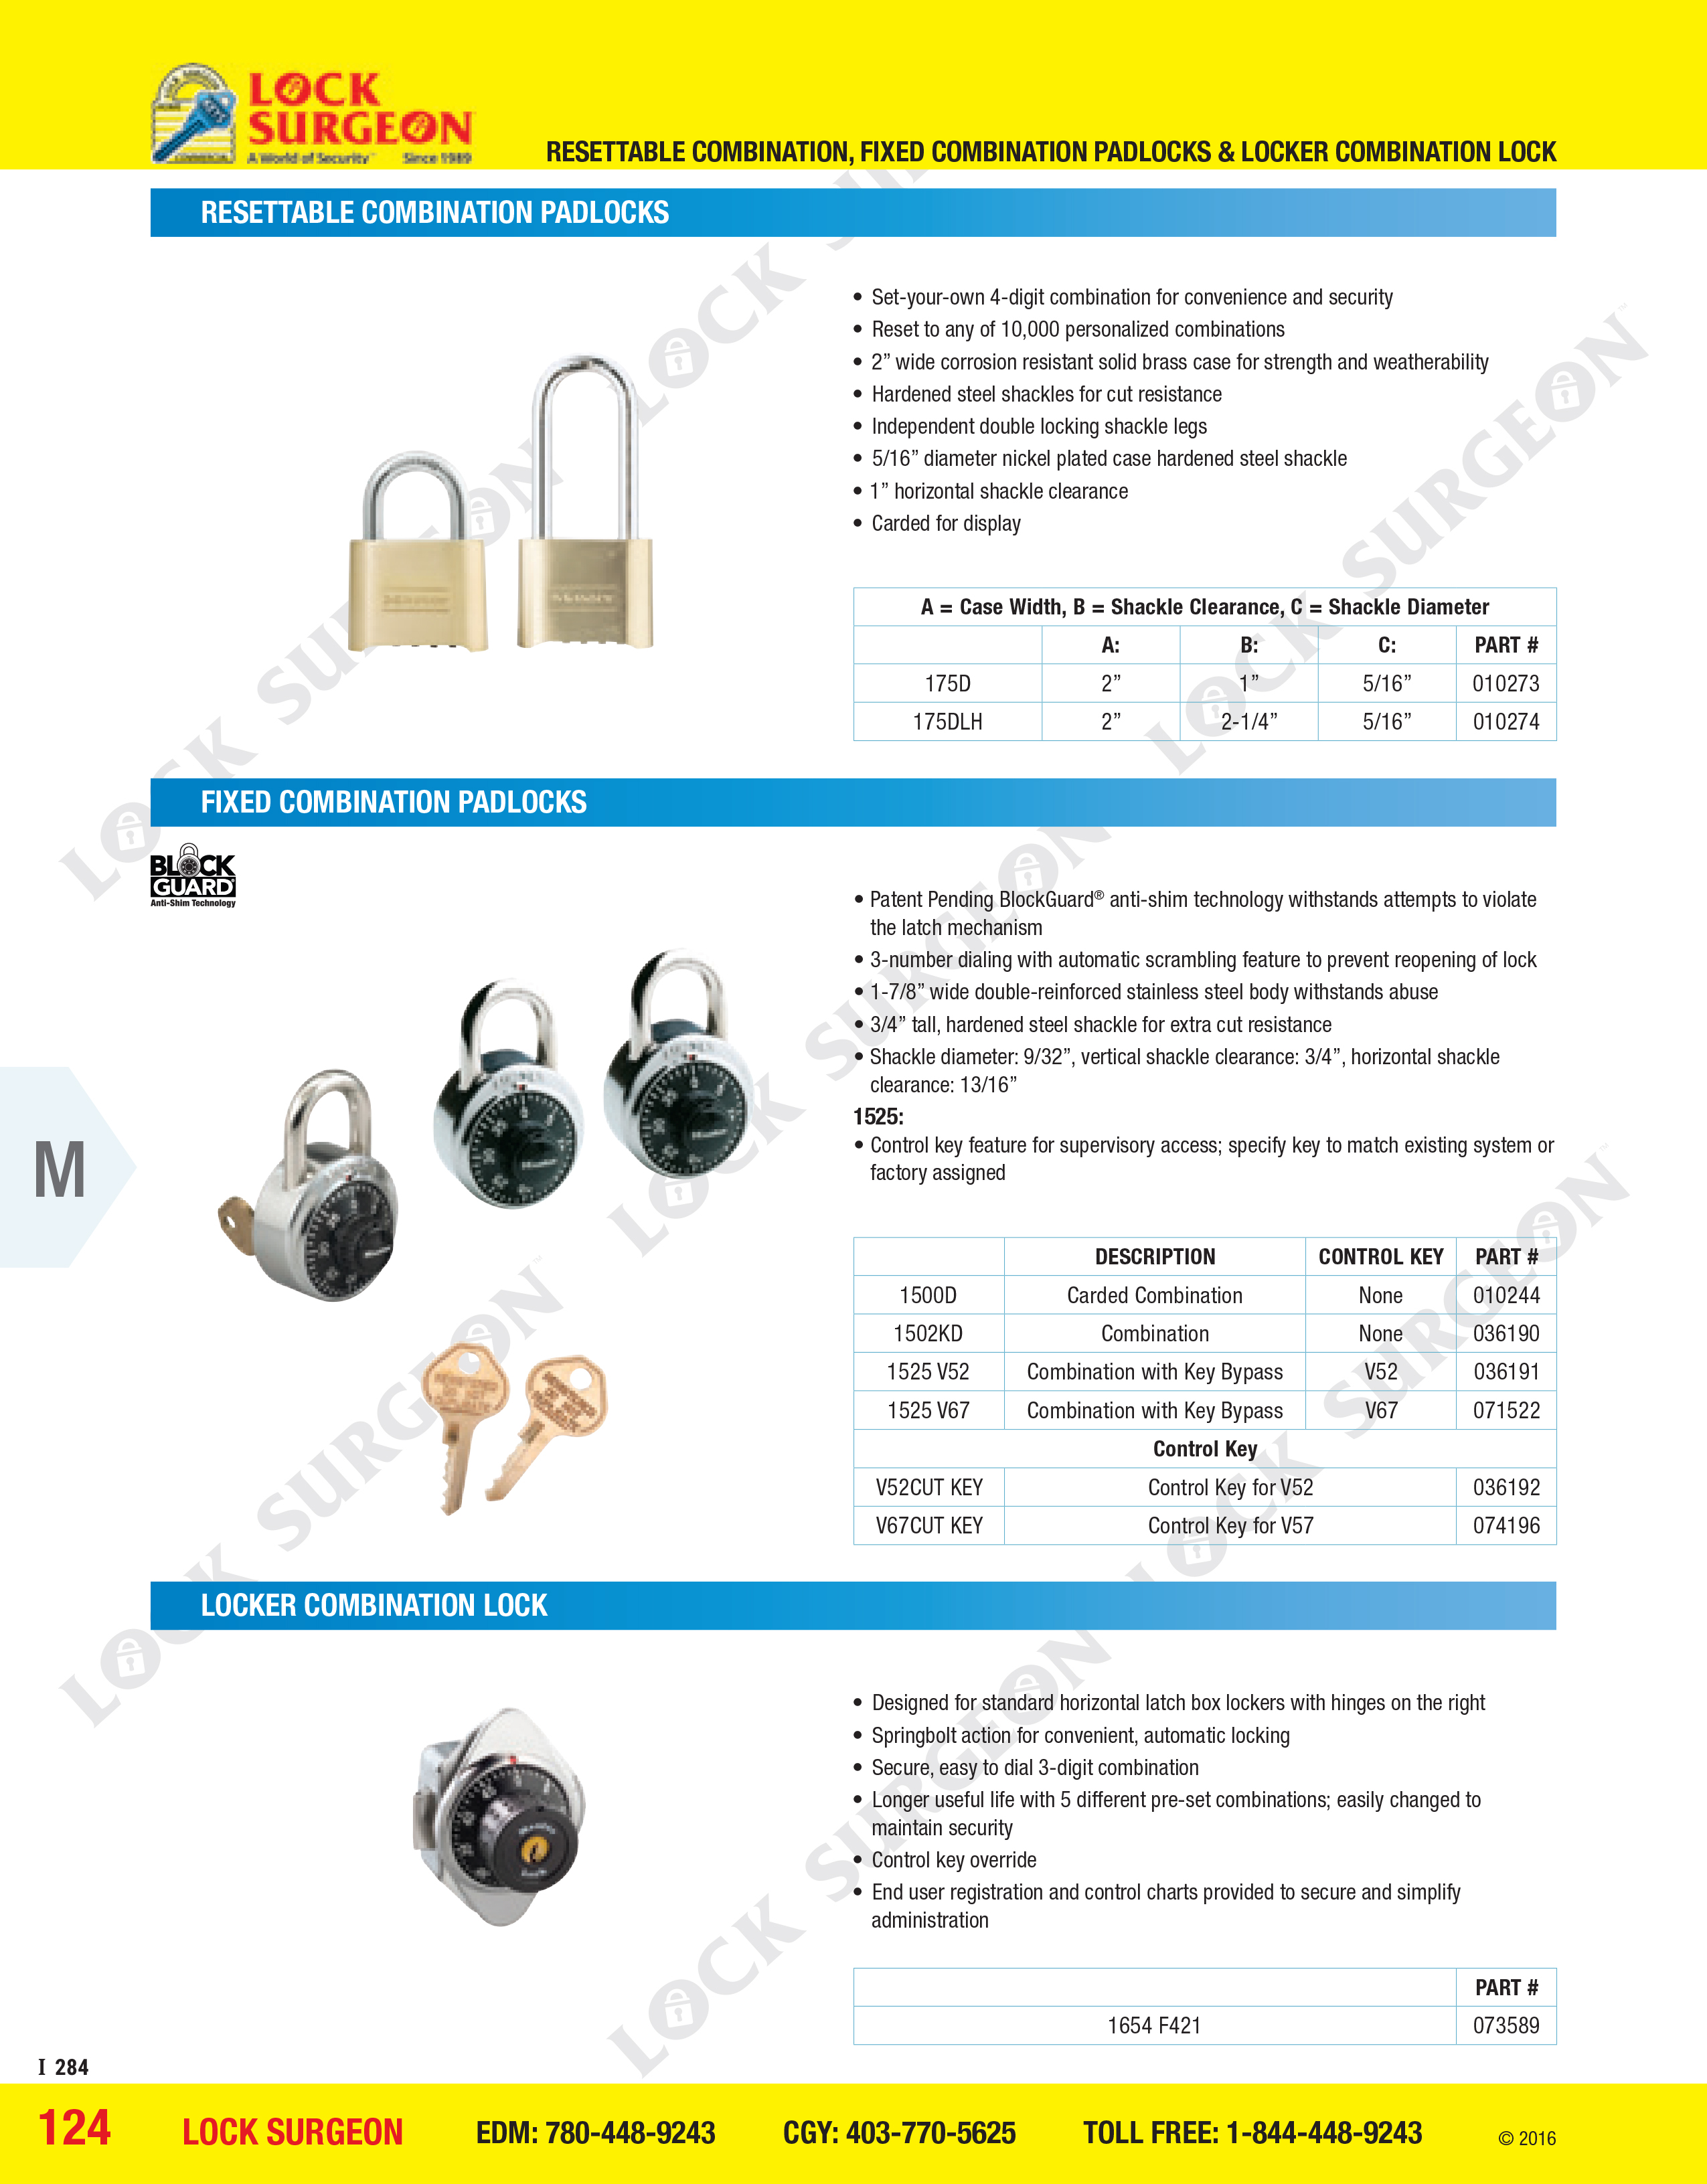 Resettable combination padlocks, fixed combination padlocks, locker combination locks